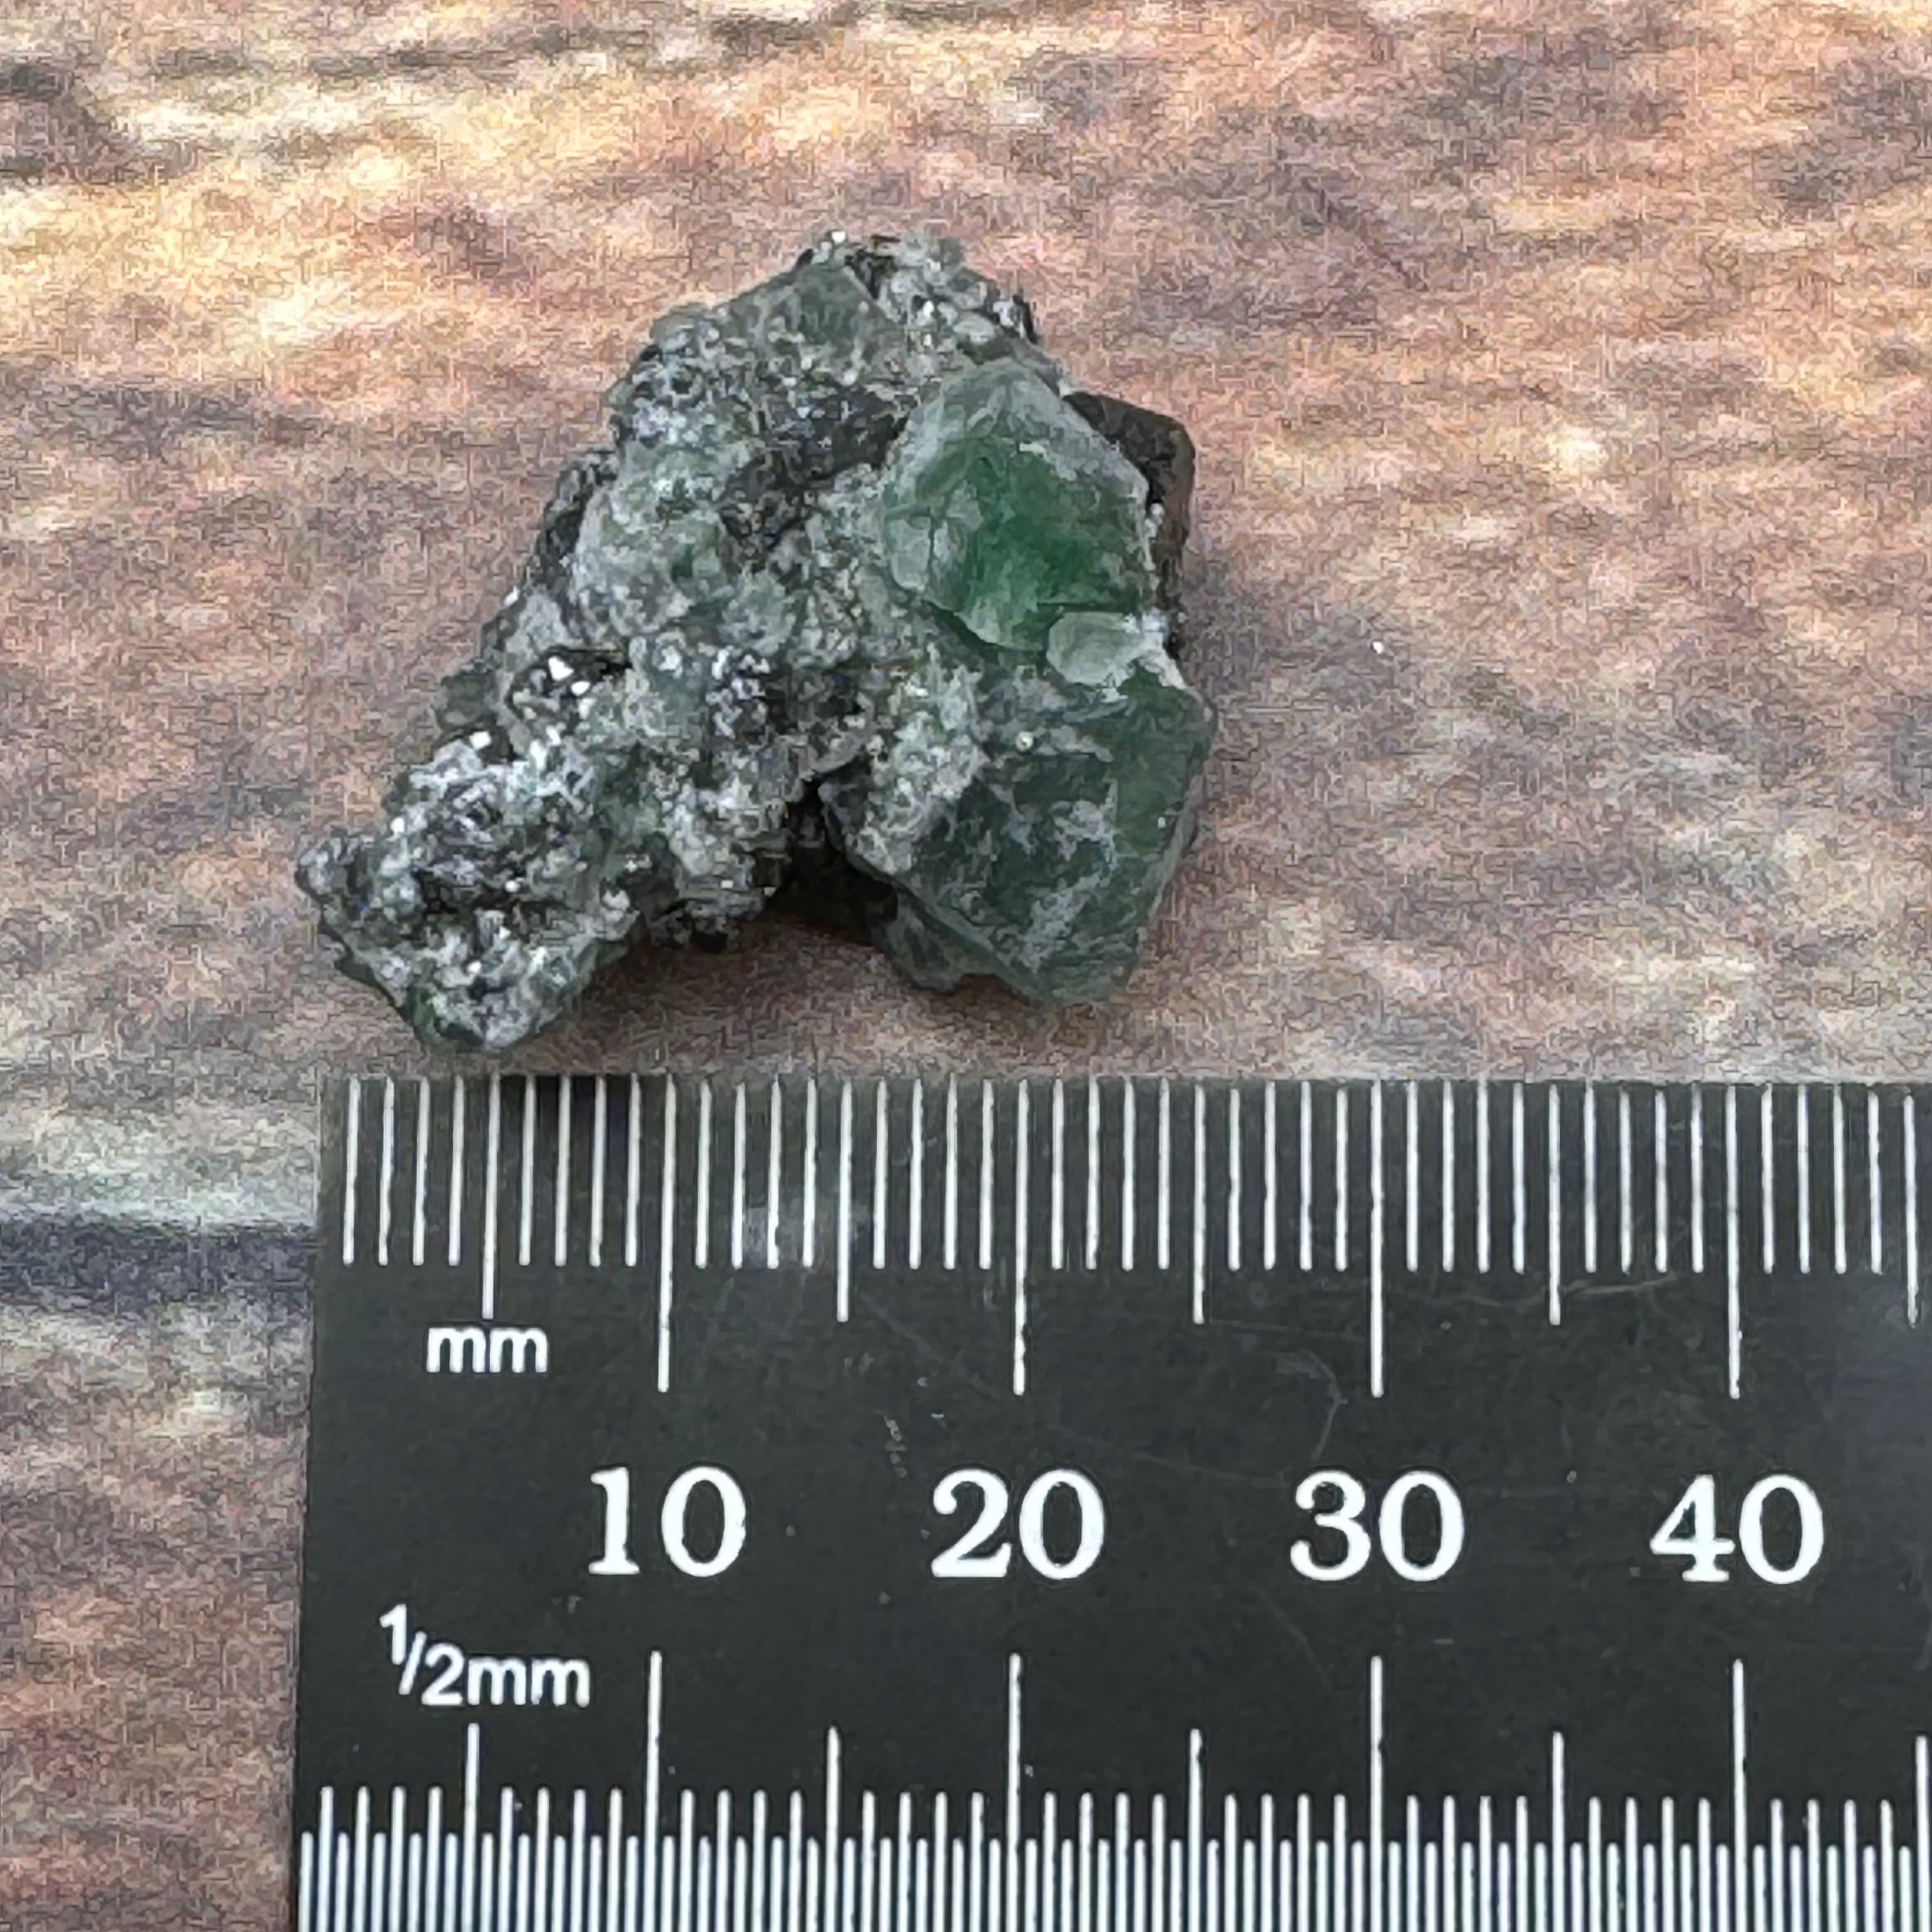 Peruvian Supernatural Green Fluorite - 055